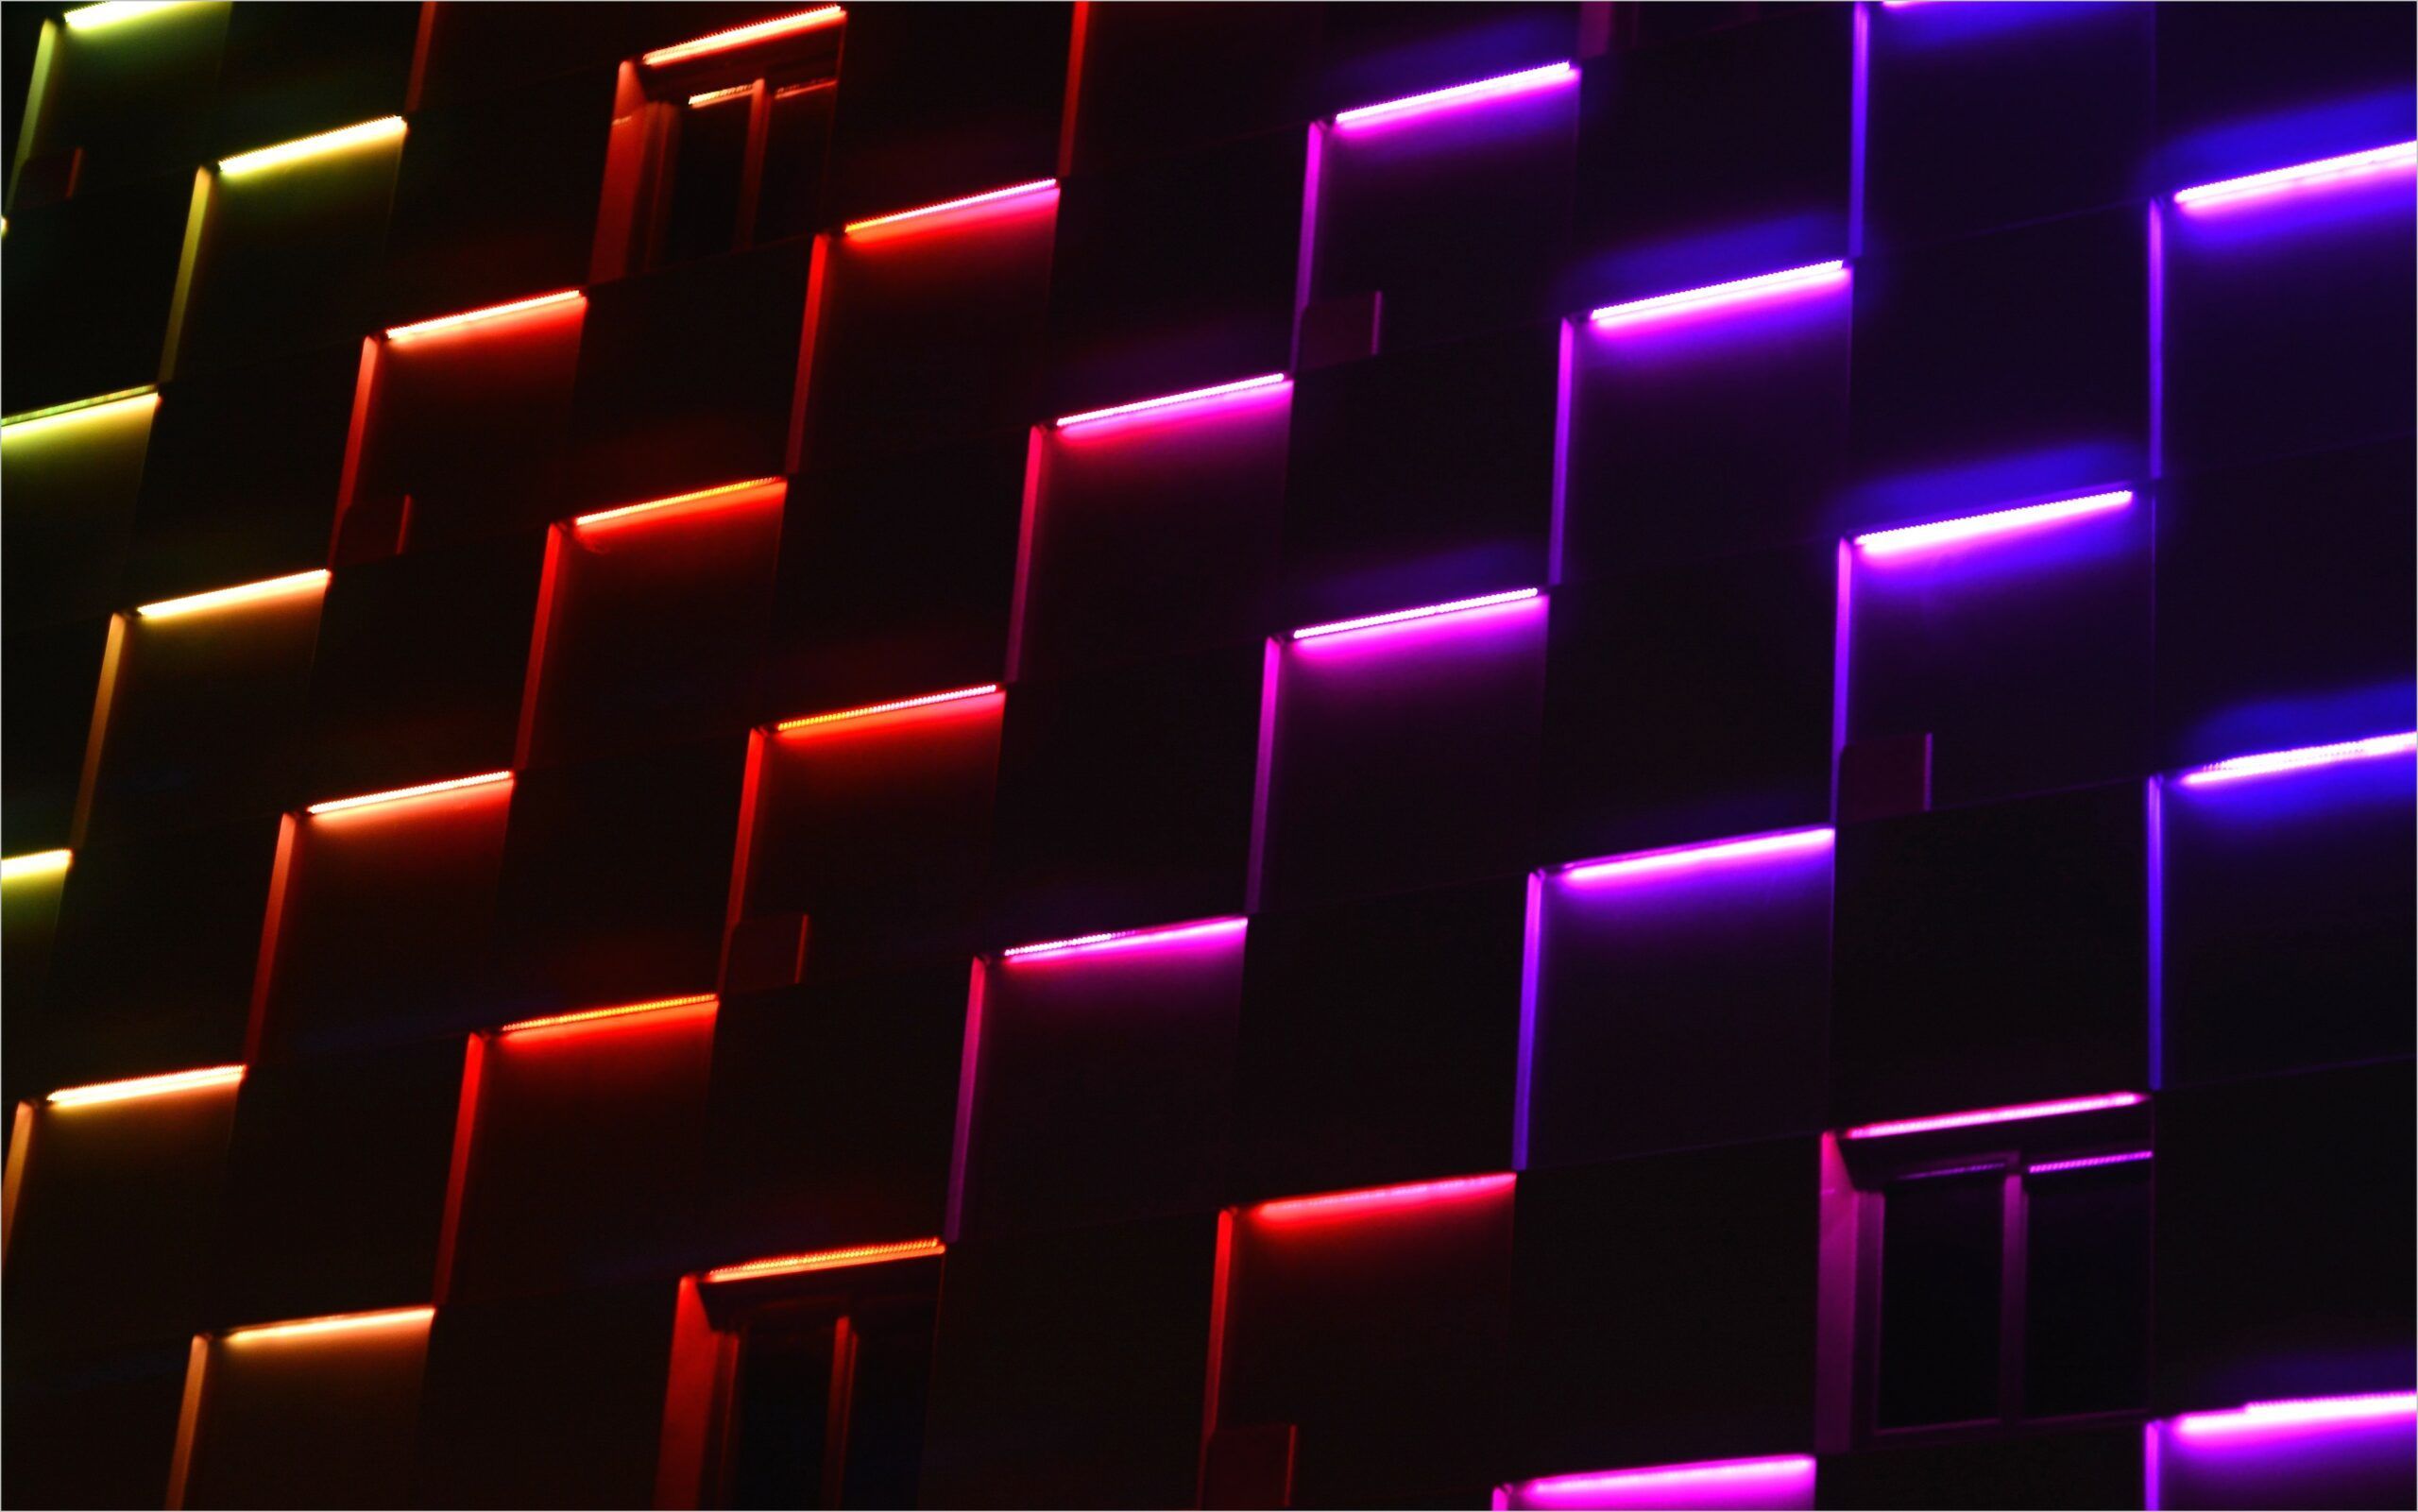 4k Wallpaper Neon Lights. Neon wallpaper, Abstract wallpaper, Colorful wallpaper